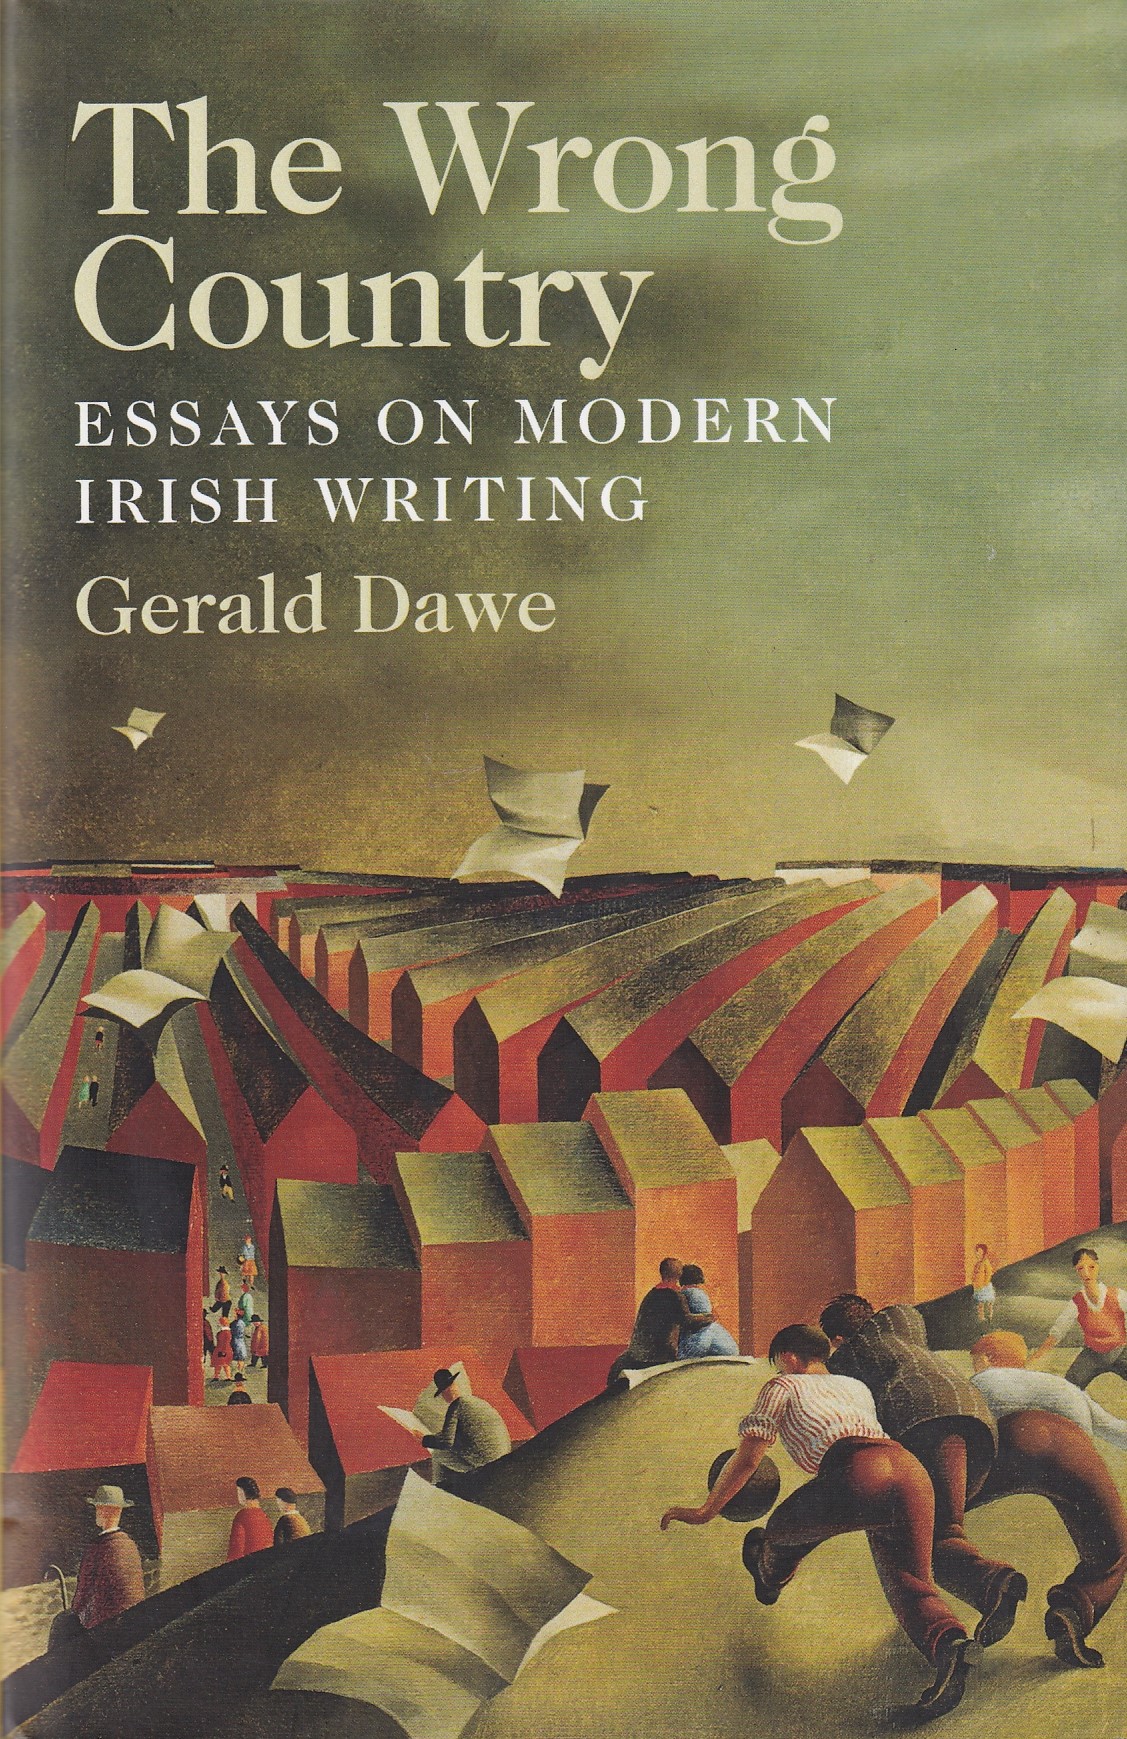 The Wrong Country: Essays on Modern Irish Writing | Gerald Dawe | Charlie Byrne's